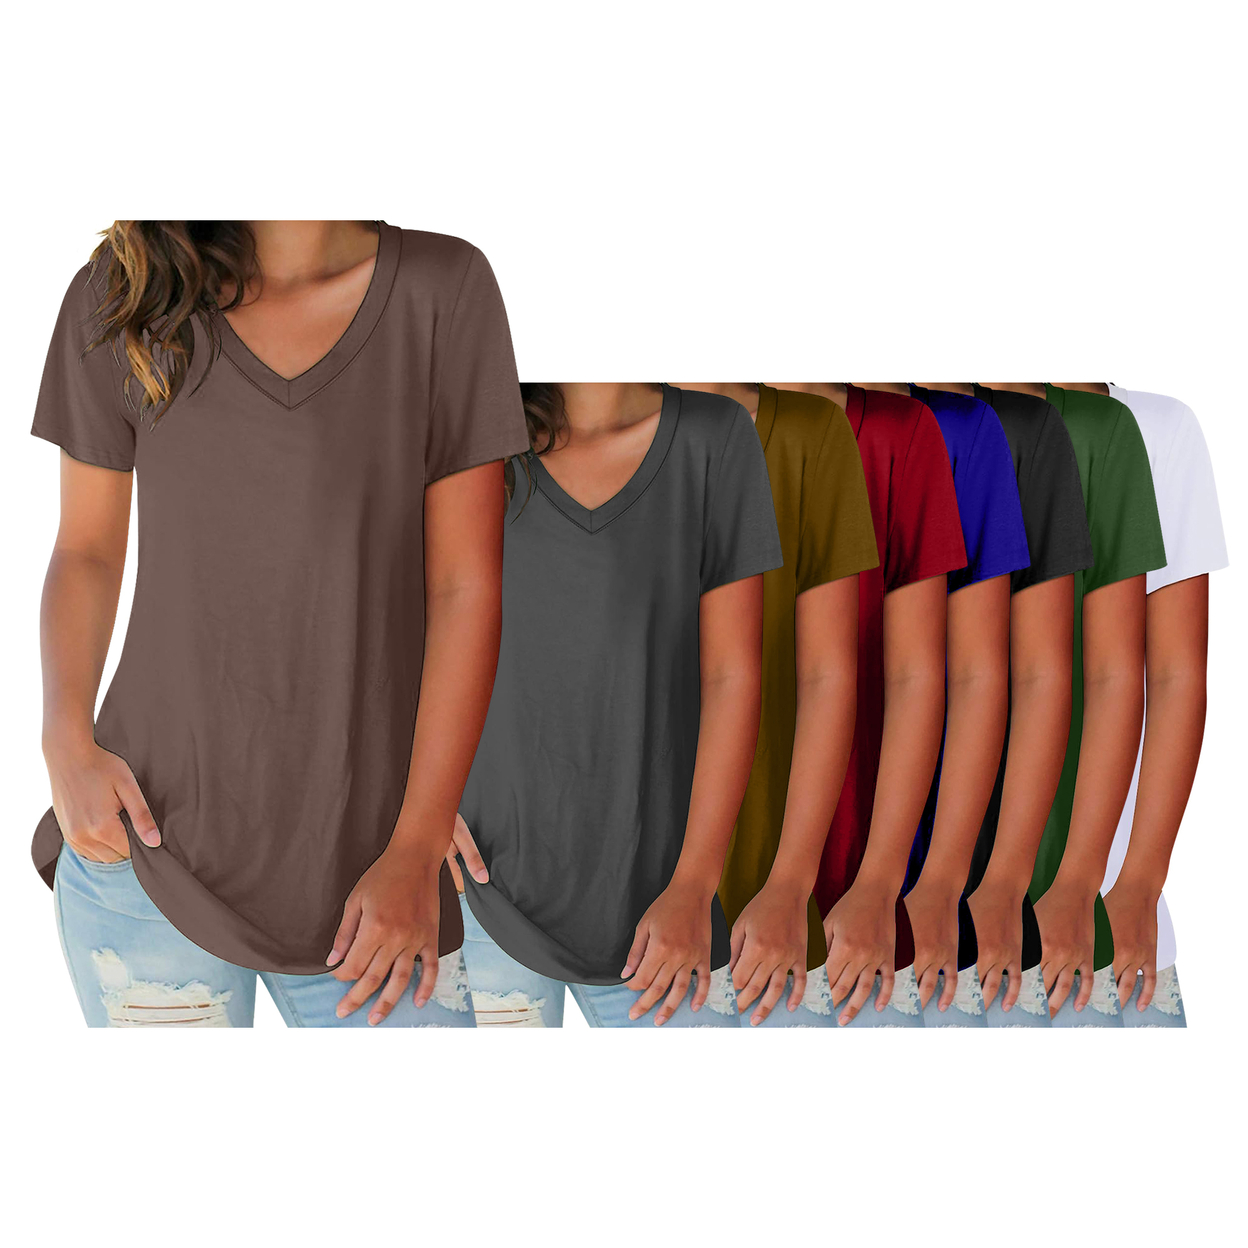 3-Pack: Women's Ultra Soft Smooth Cotton Blend Basic V-Neck Short Sleeve Shirts - Black, Navy Mustard, Small